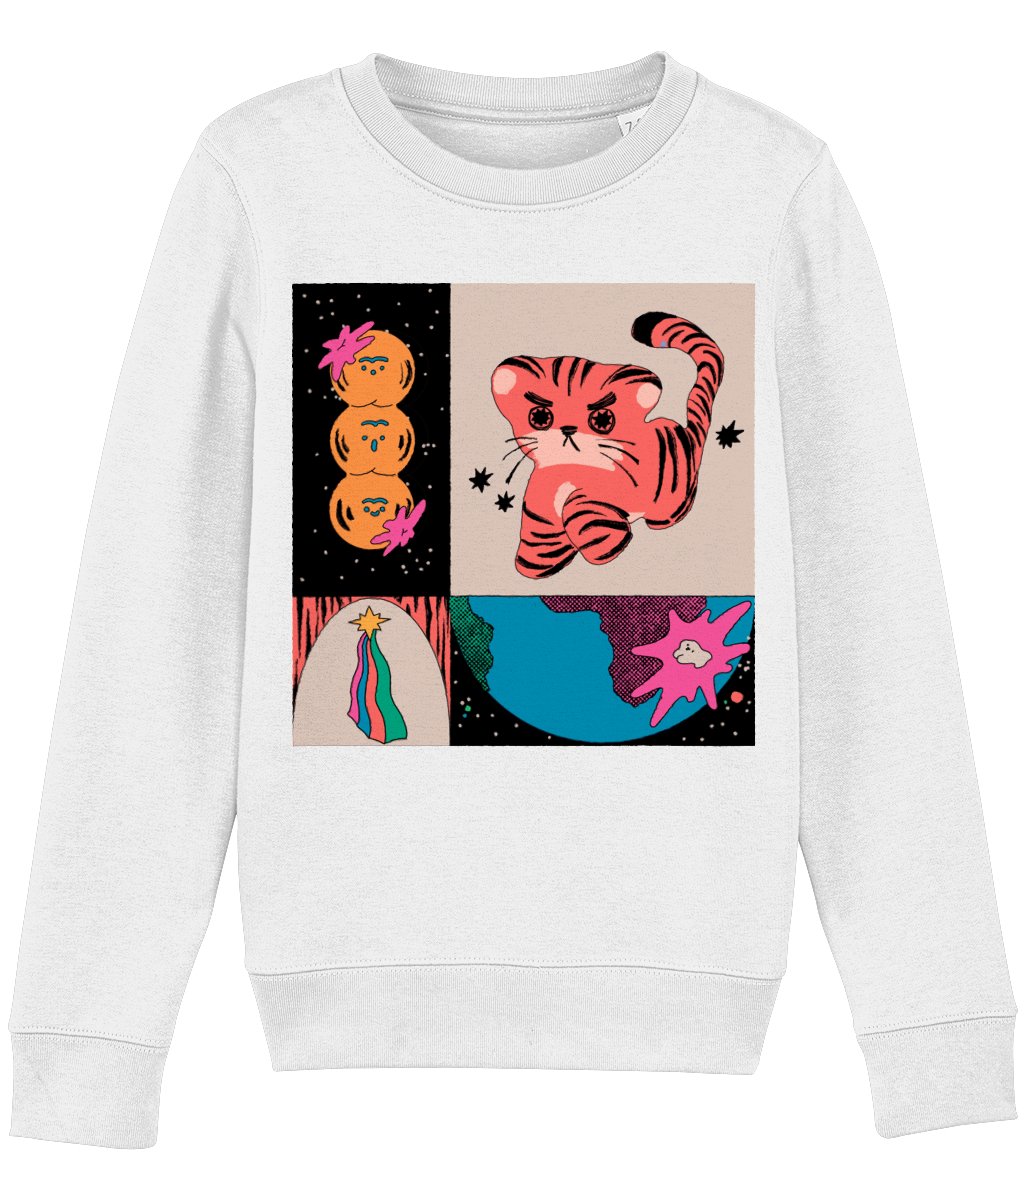 Tiger Sweatshirt - Artworks Clothing